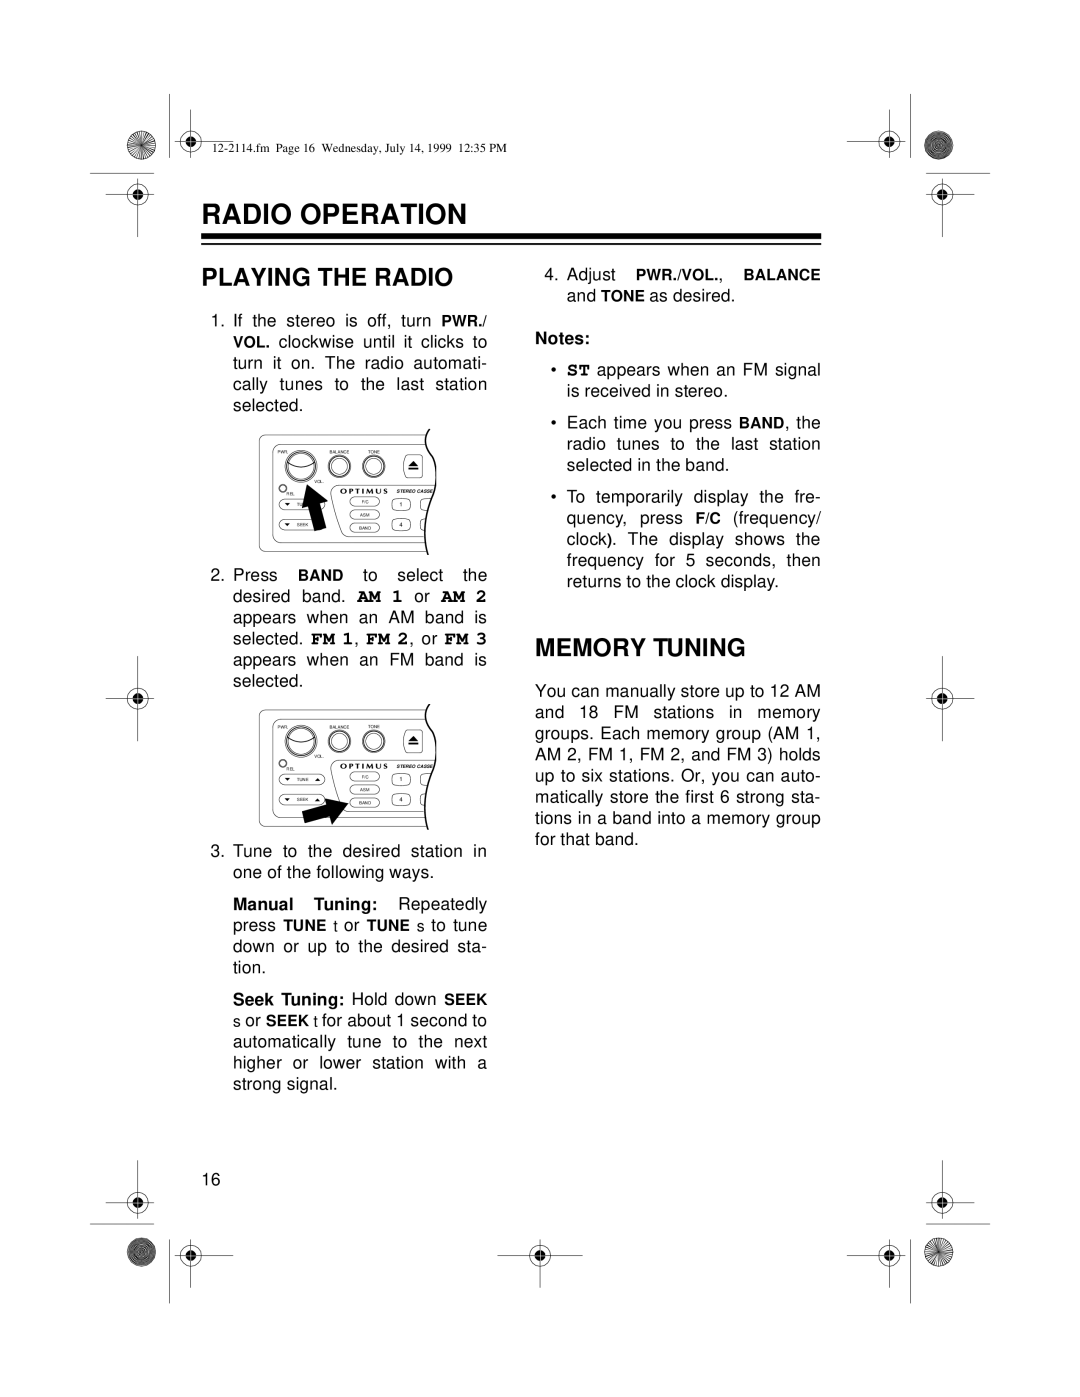 Optimus 4301-3838-0, 12-2114 owner manual Radio Operation, Playing The Radio, Memory Tuning 